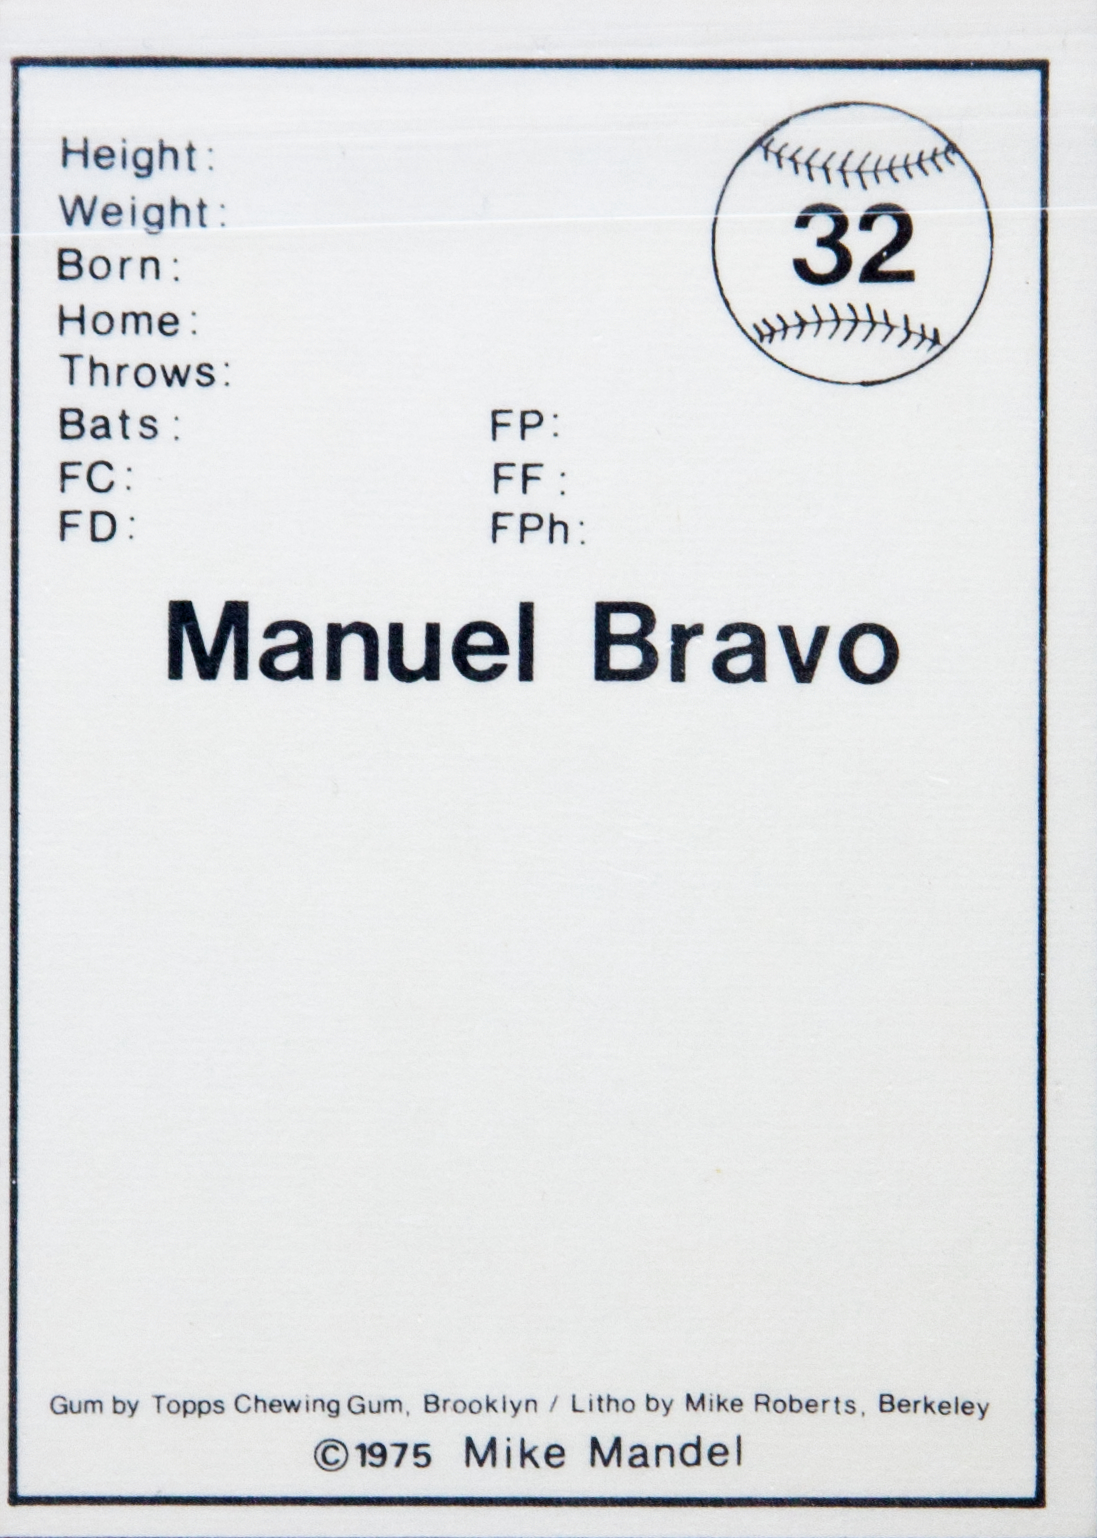 Manuel Bravo